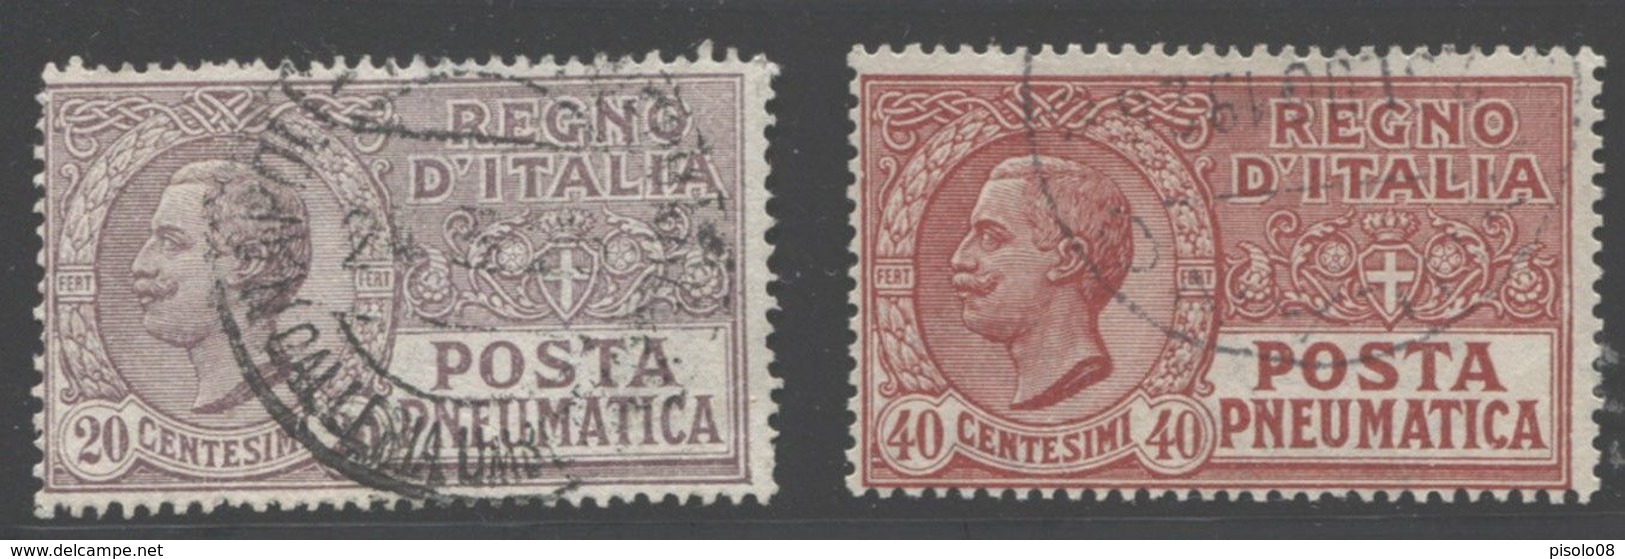 REGNO 1925  POSTA PNEUMATICA  USATA - Pneumatic Mail